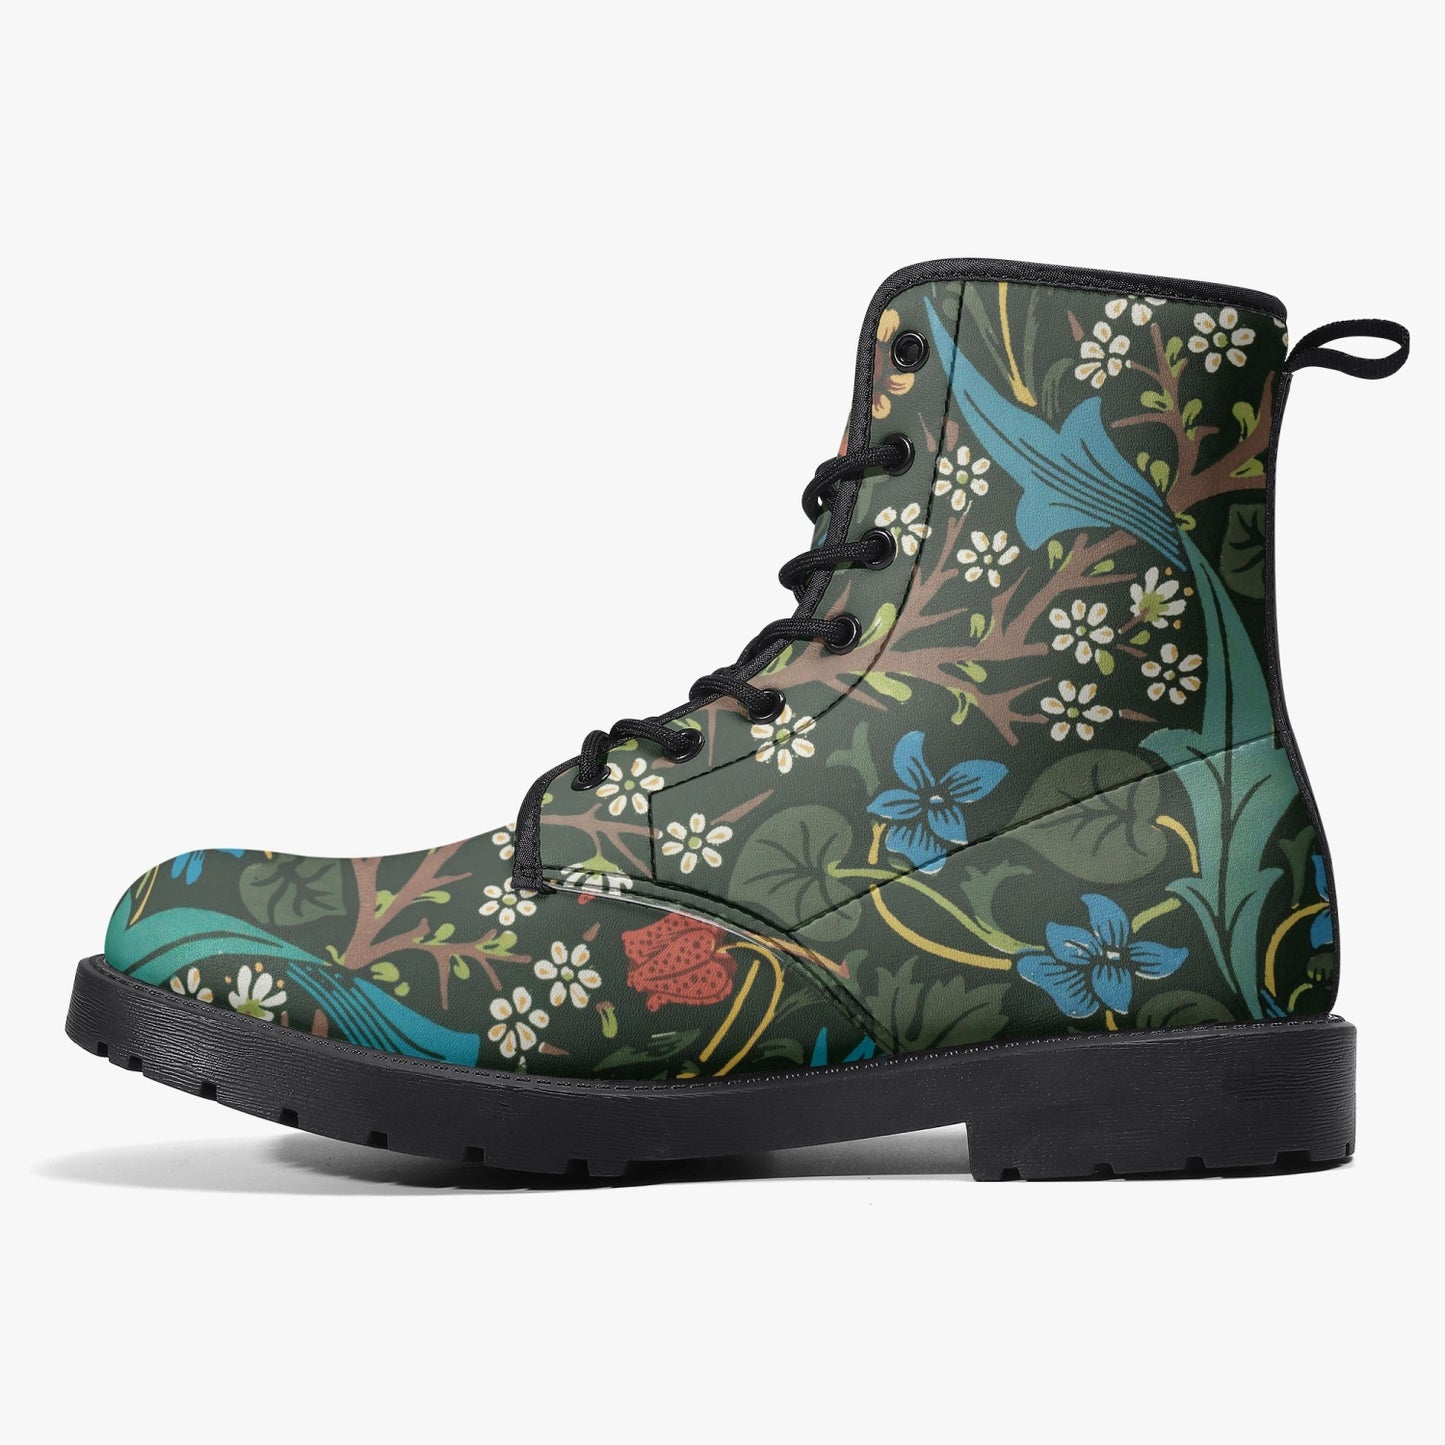 Flowered Boot Docs Style: William Morris Buckthorn Wallpaper Pattern